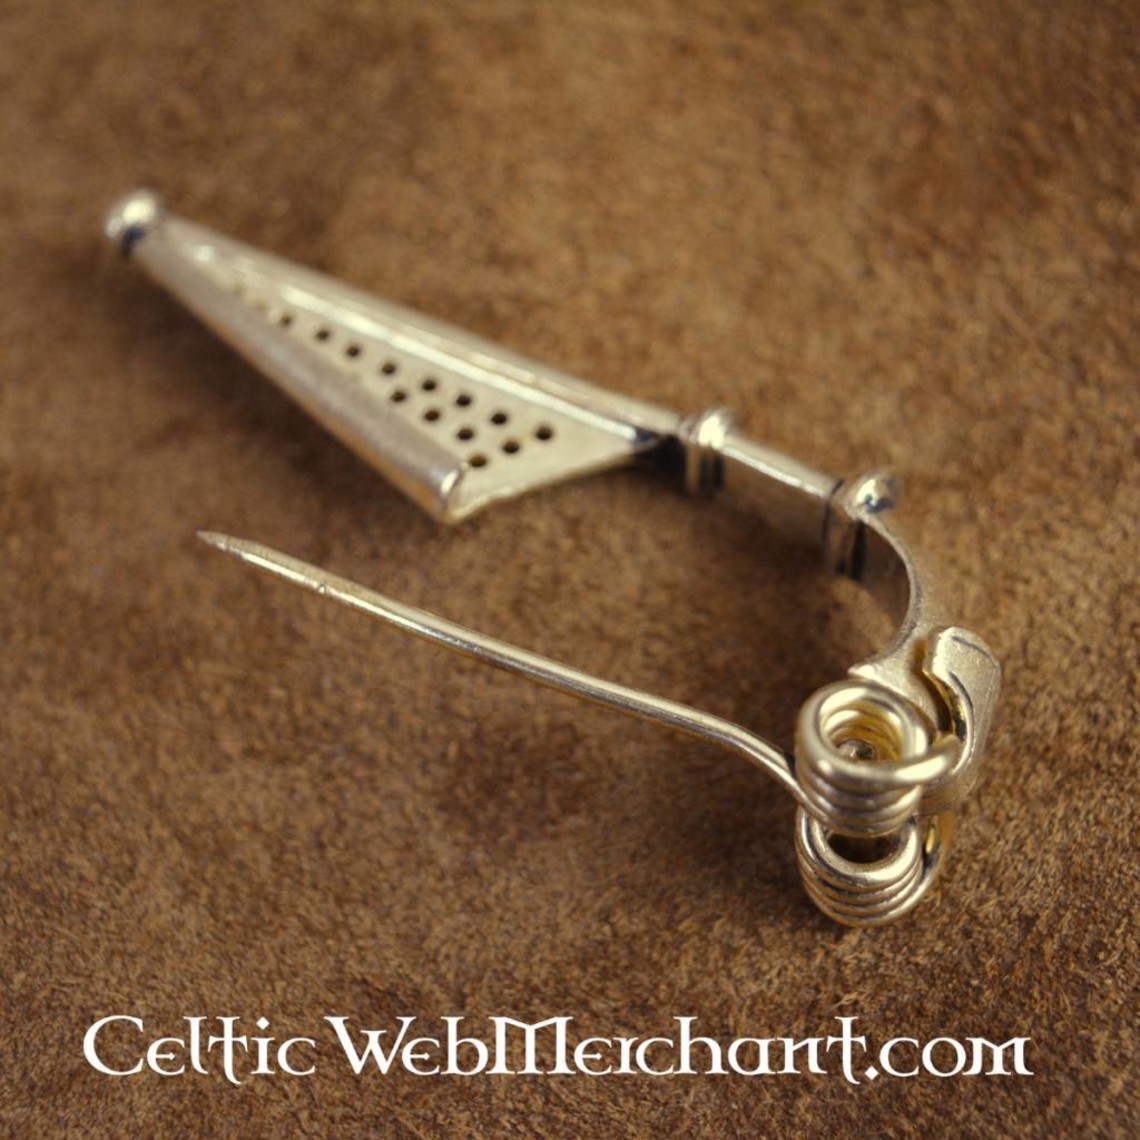 Germanic fibula 1st century AD. - CelticWebMerchant.com